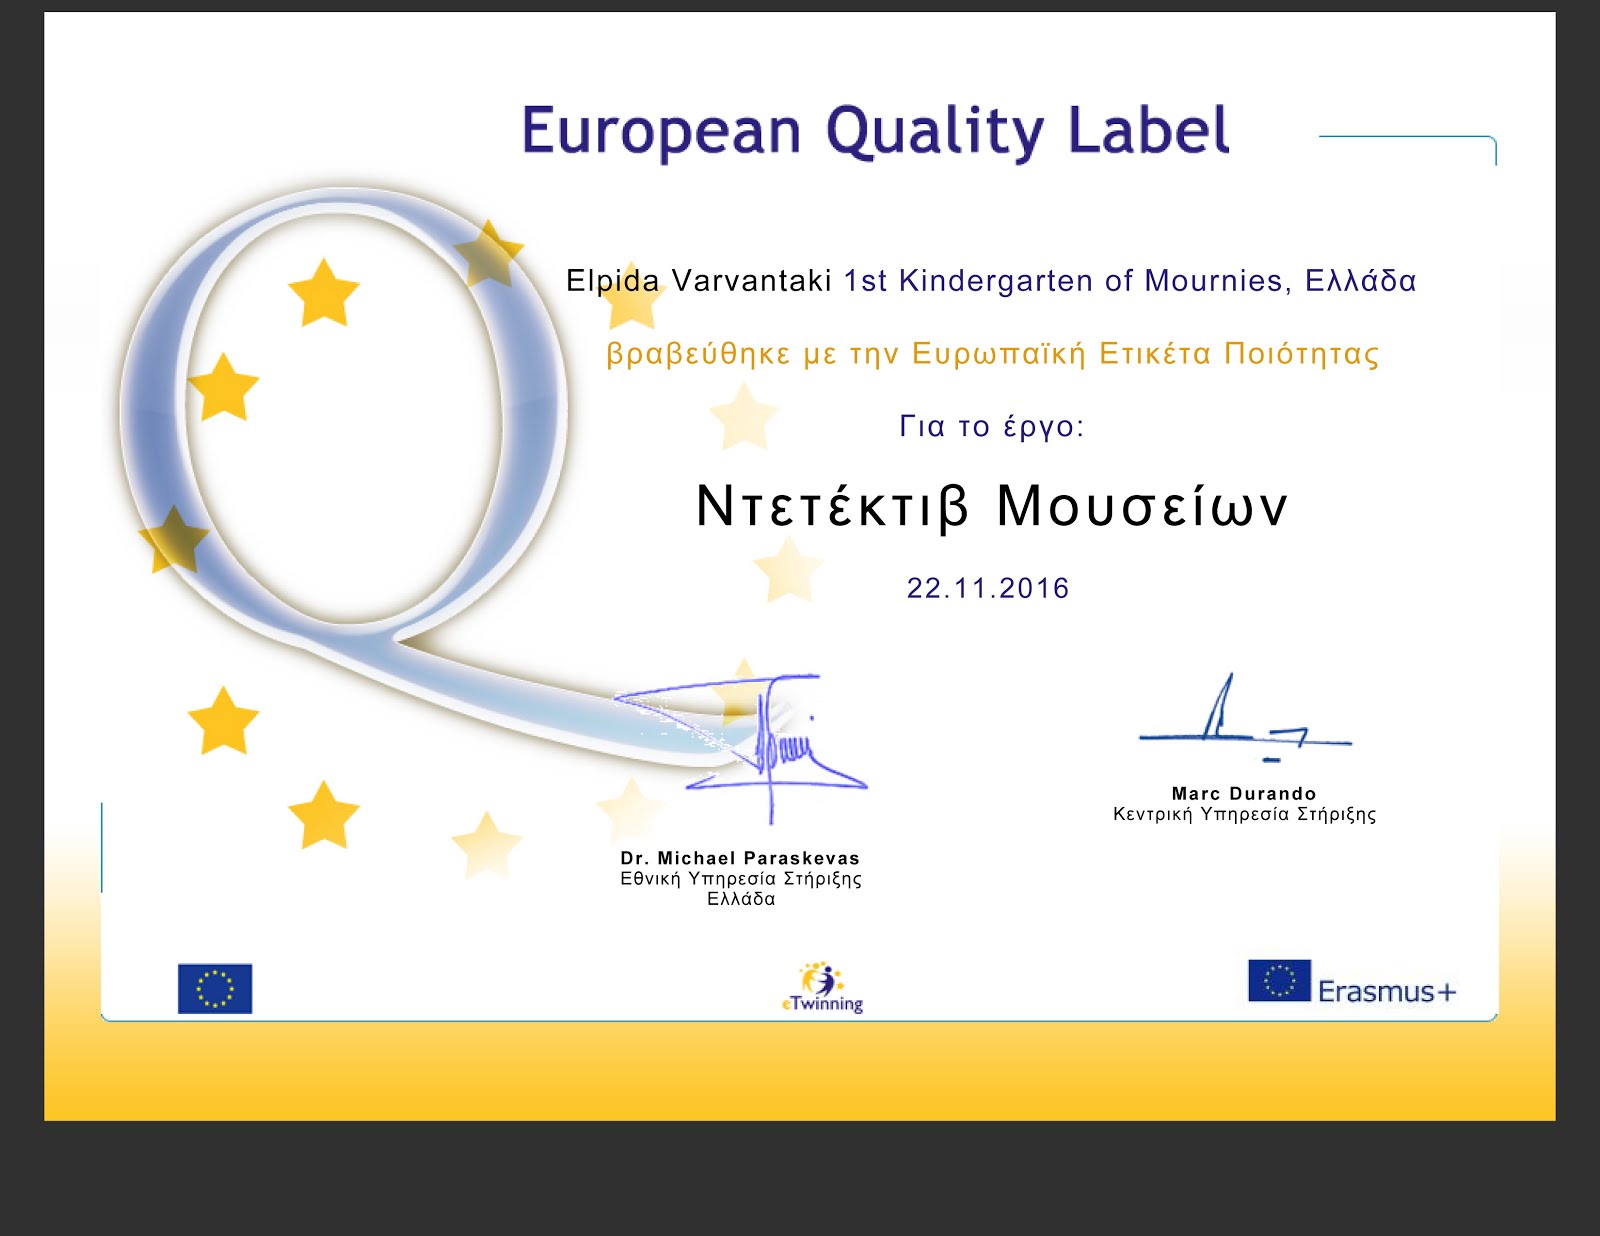 European Quality Label "Museum Detectives"